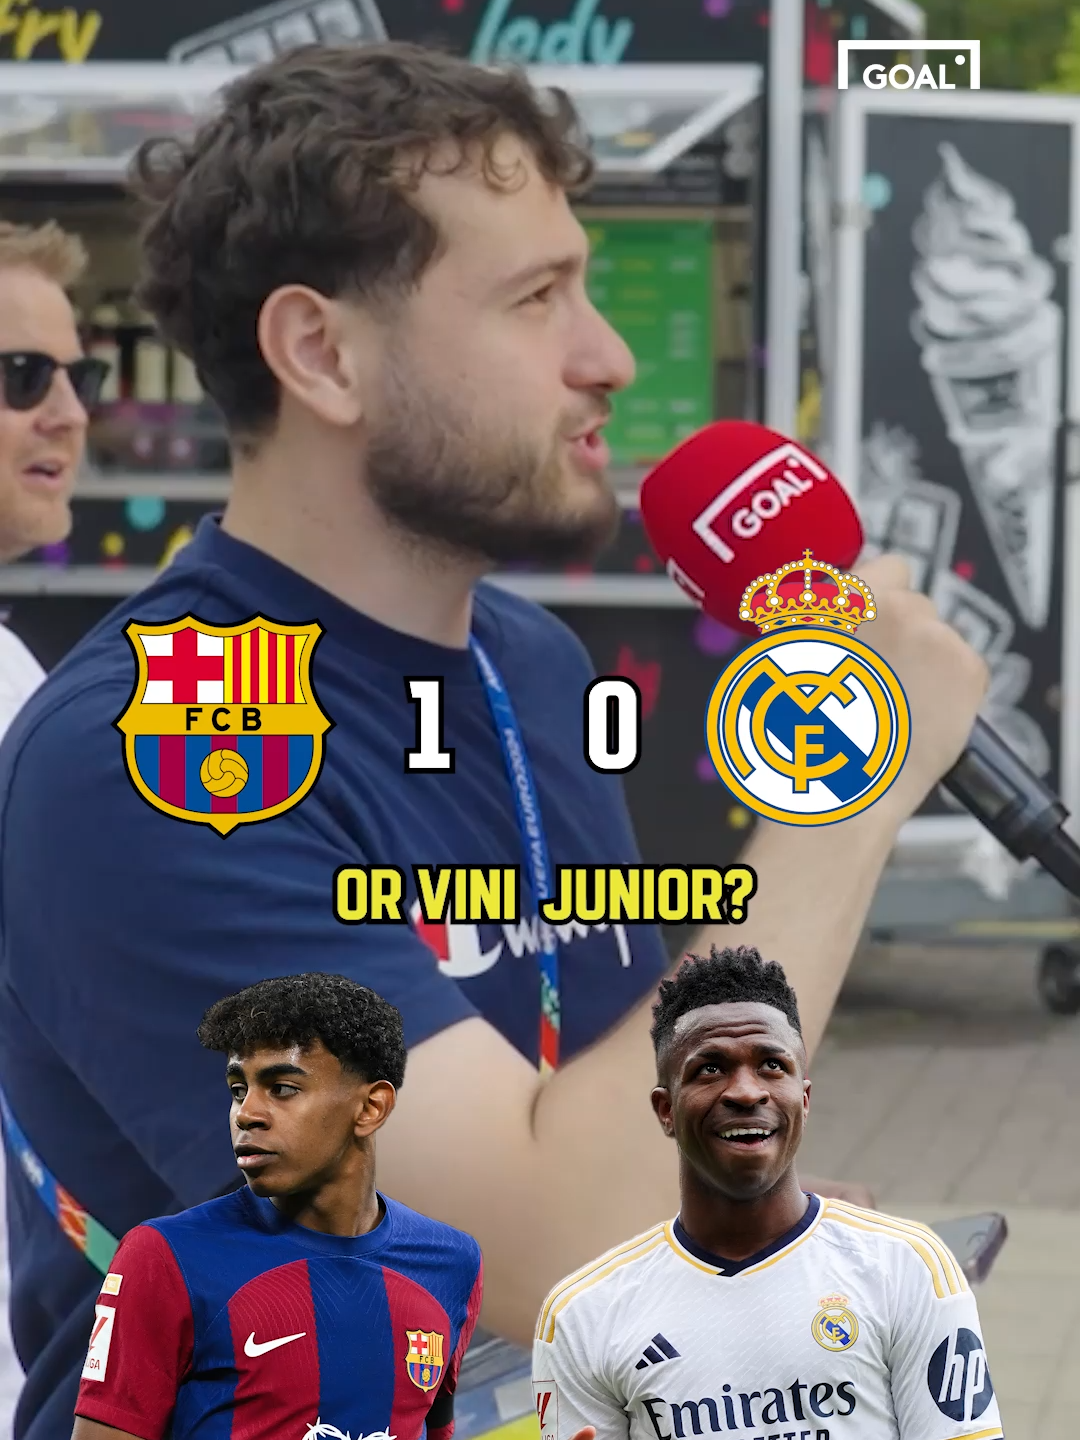 Barcelona v Real Madrid: which El Clasico team do you prefer? 🇪🇸  #football #barcelona #realmadrid #ElClasico #laliga